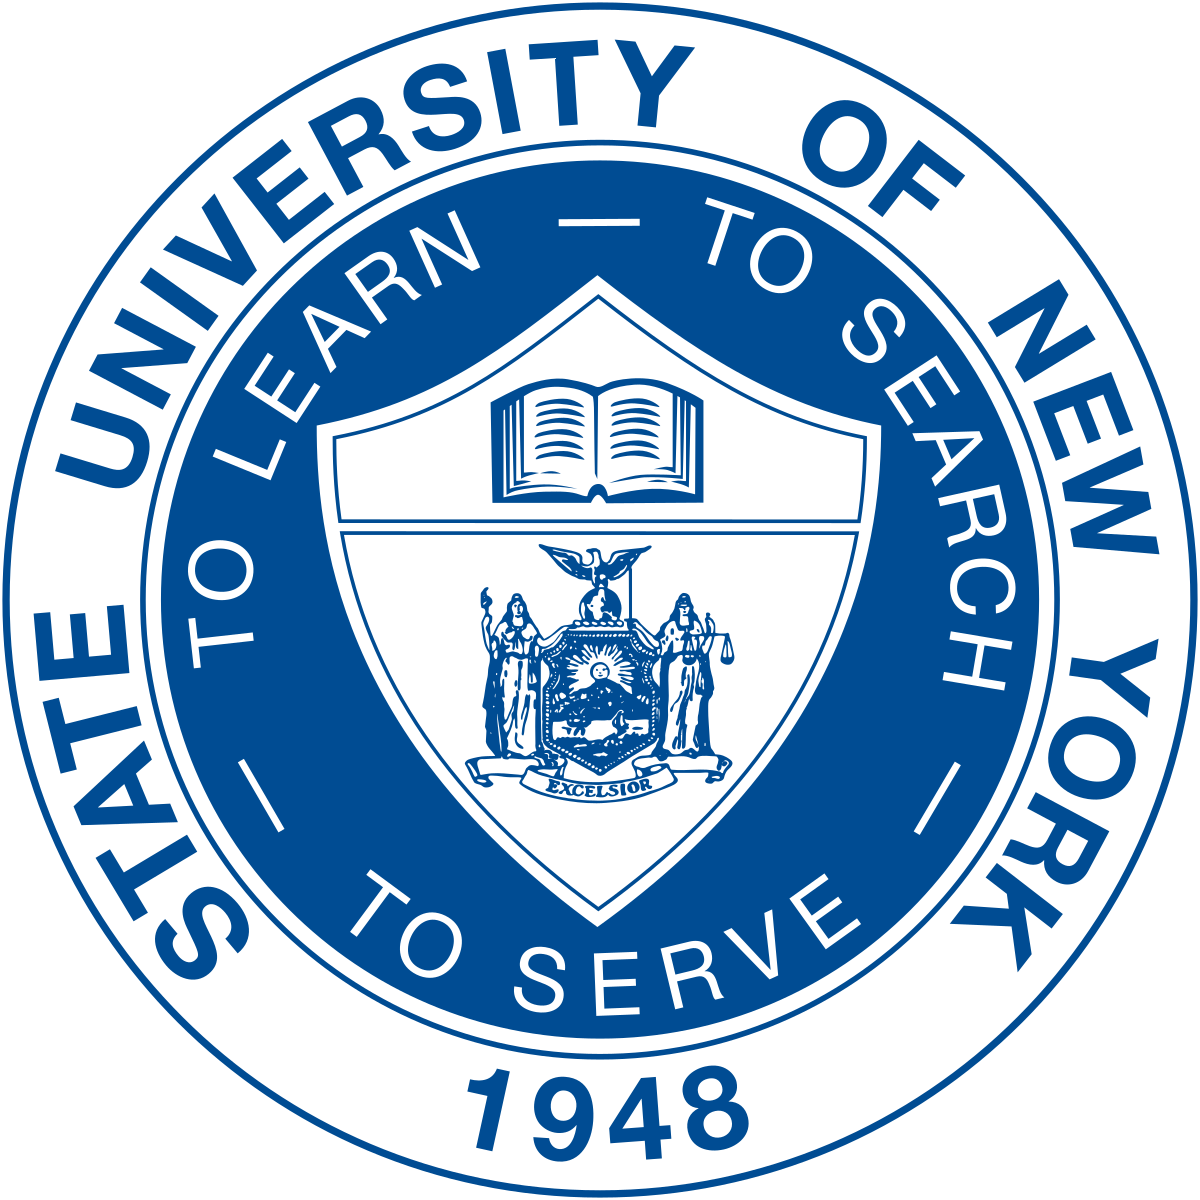 State_University_of_New_York_seal.svg